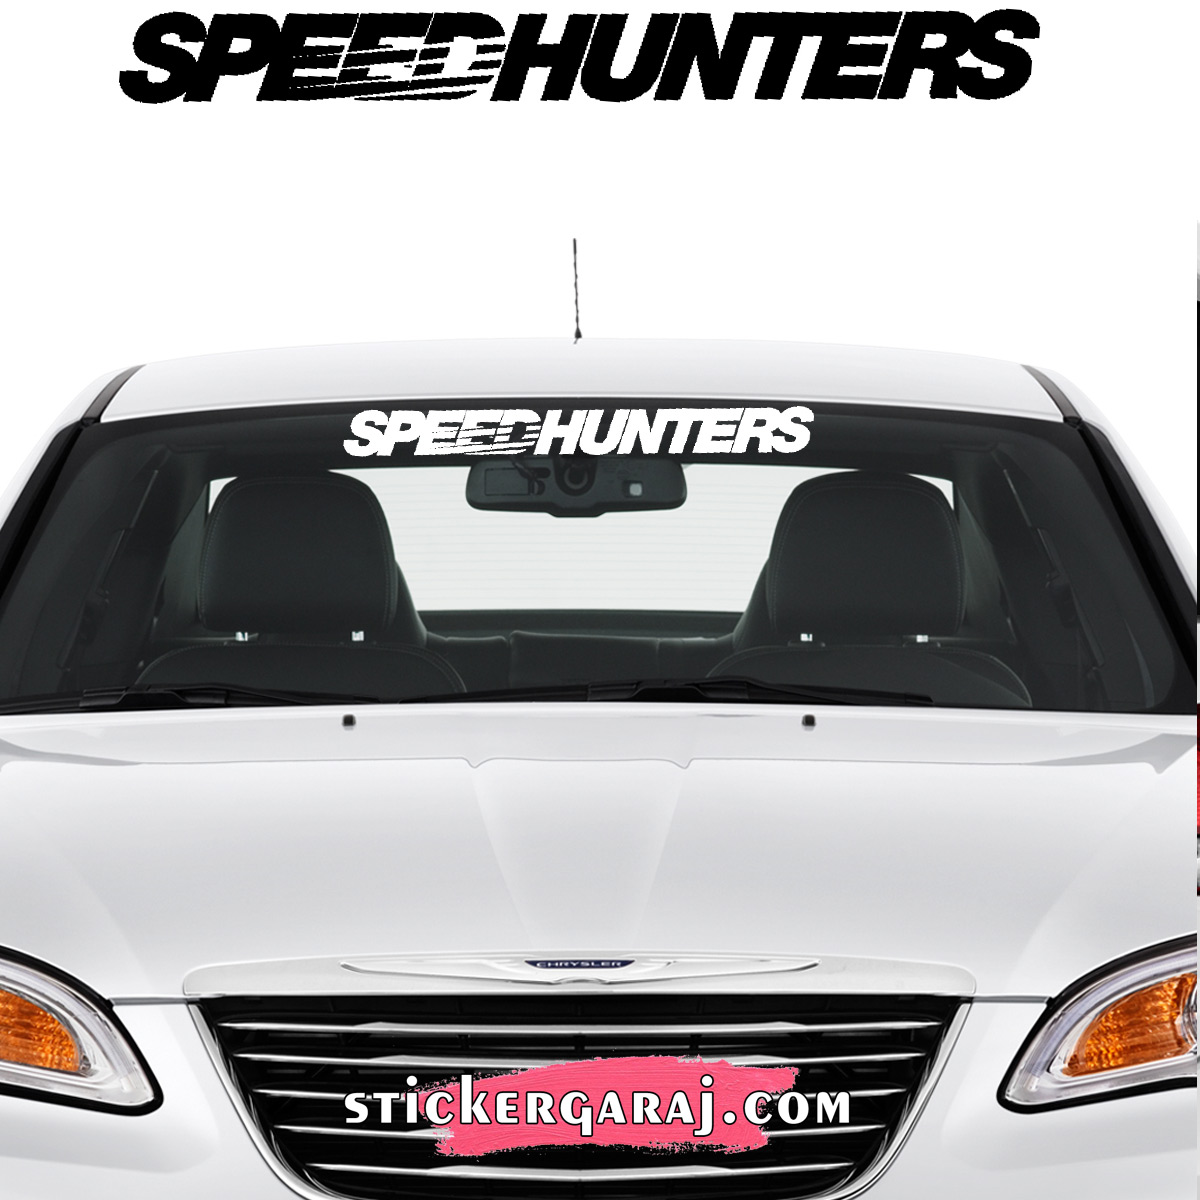 Subaru oto sticker 1 - Subaru cam sticker - speedhunters